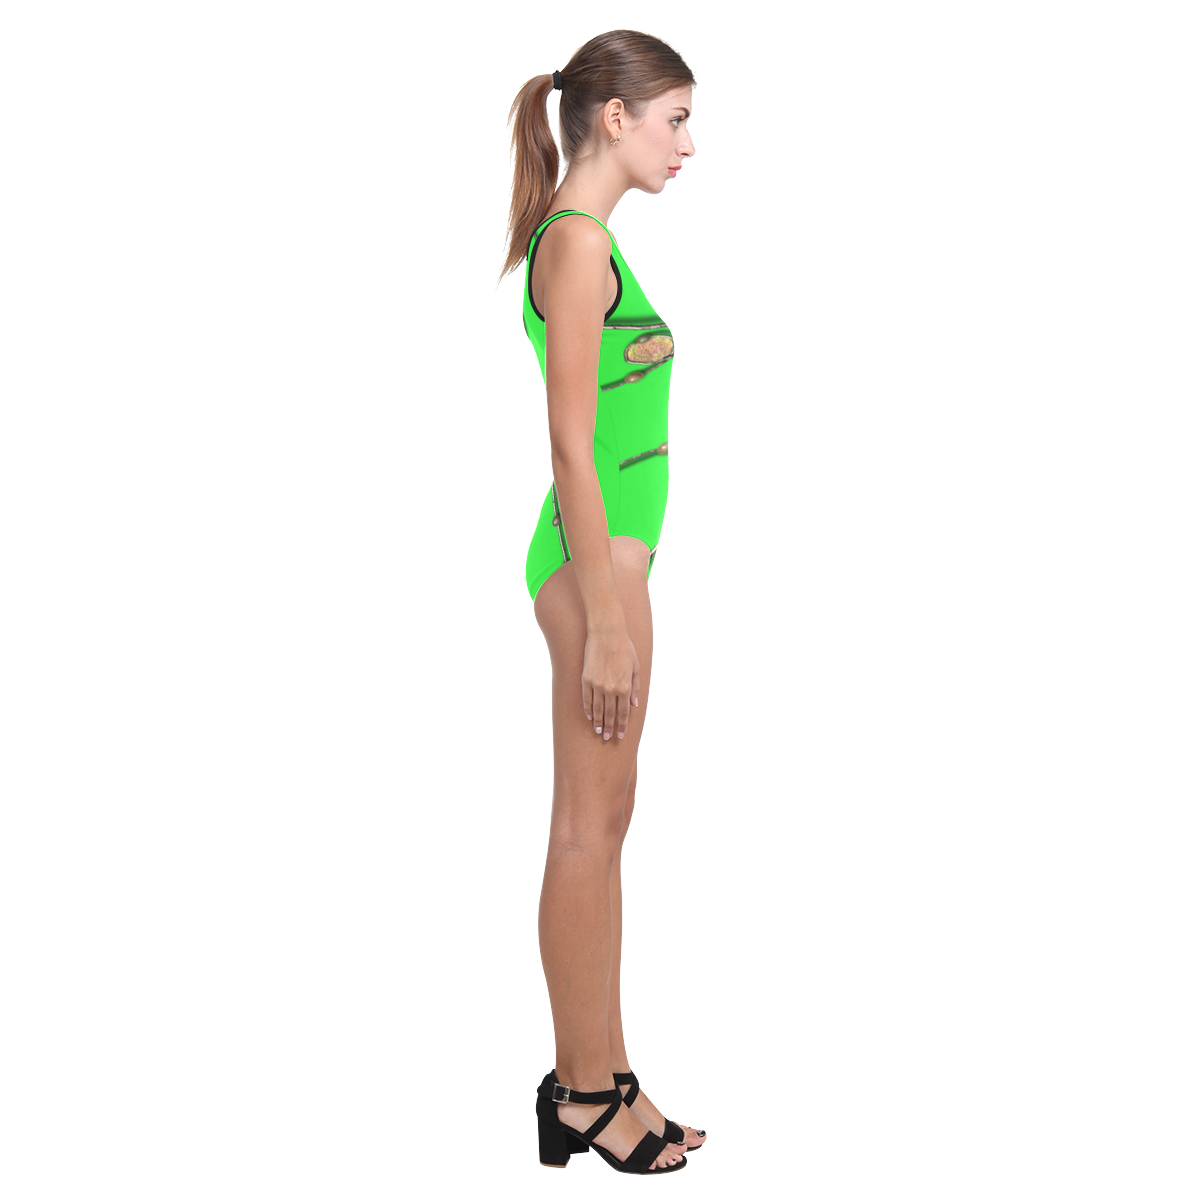 Swim suit in Neon green delight-Annabellerockz Vest One Piece Swimsuit (Model S04)